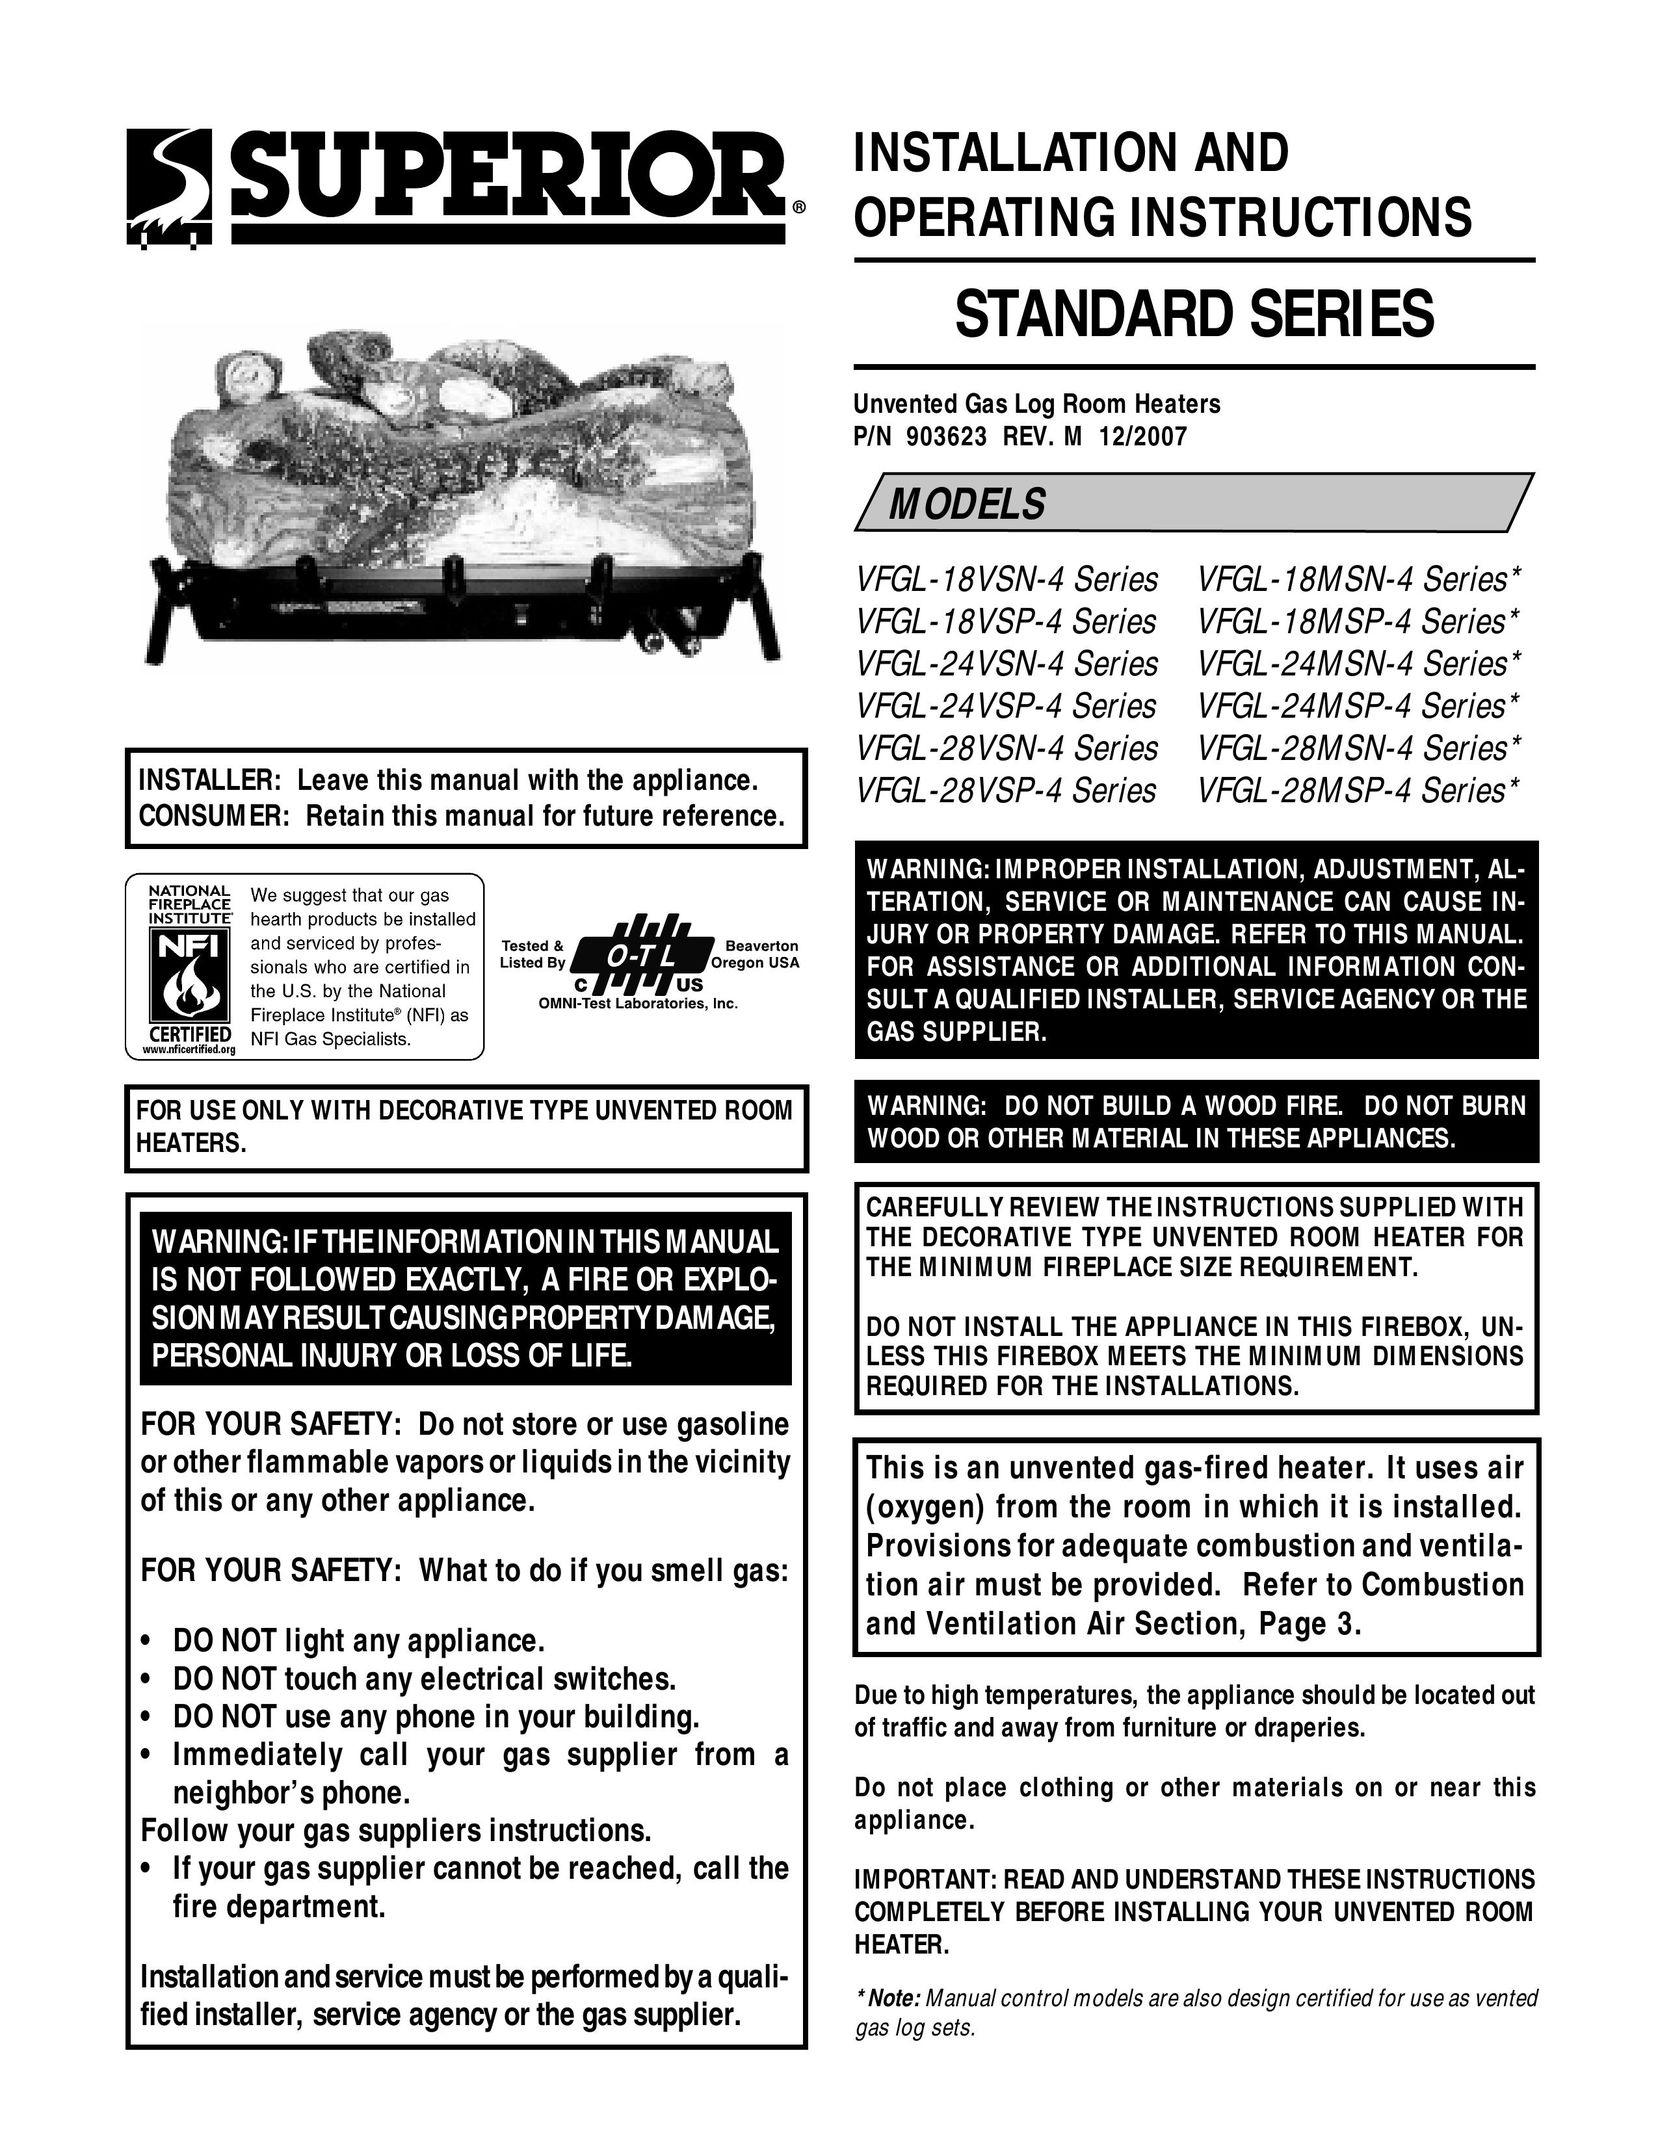 Superior VFGL-24MSP-4 SERIES* Gas Heater User Manual